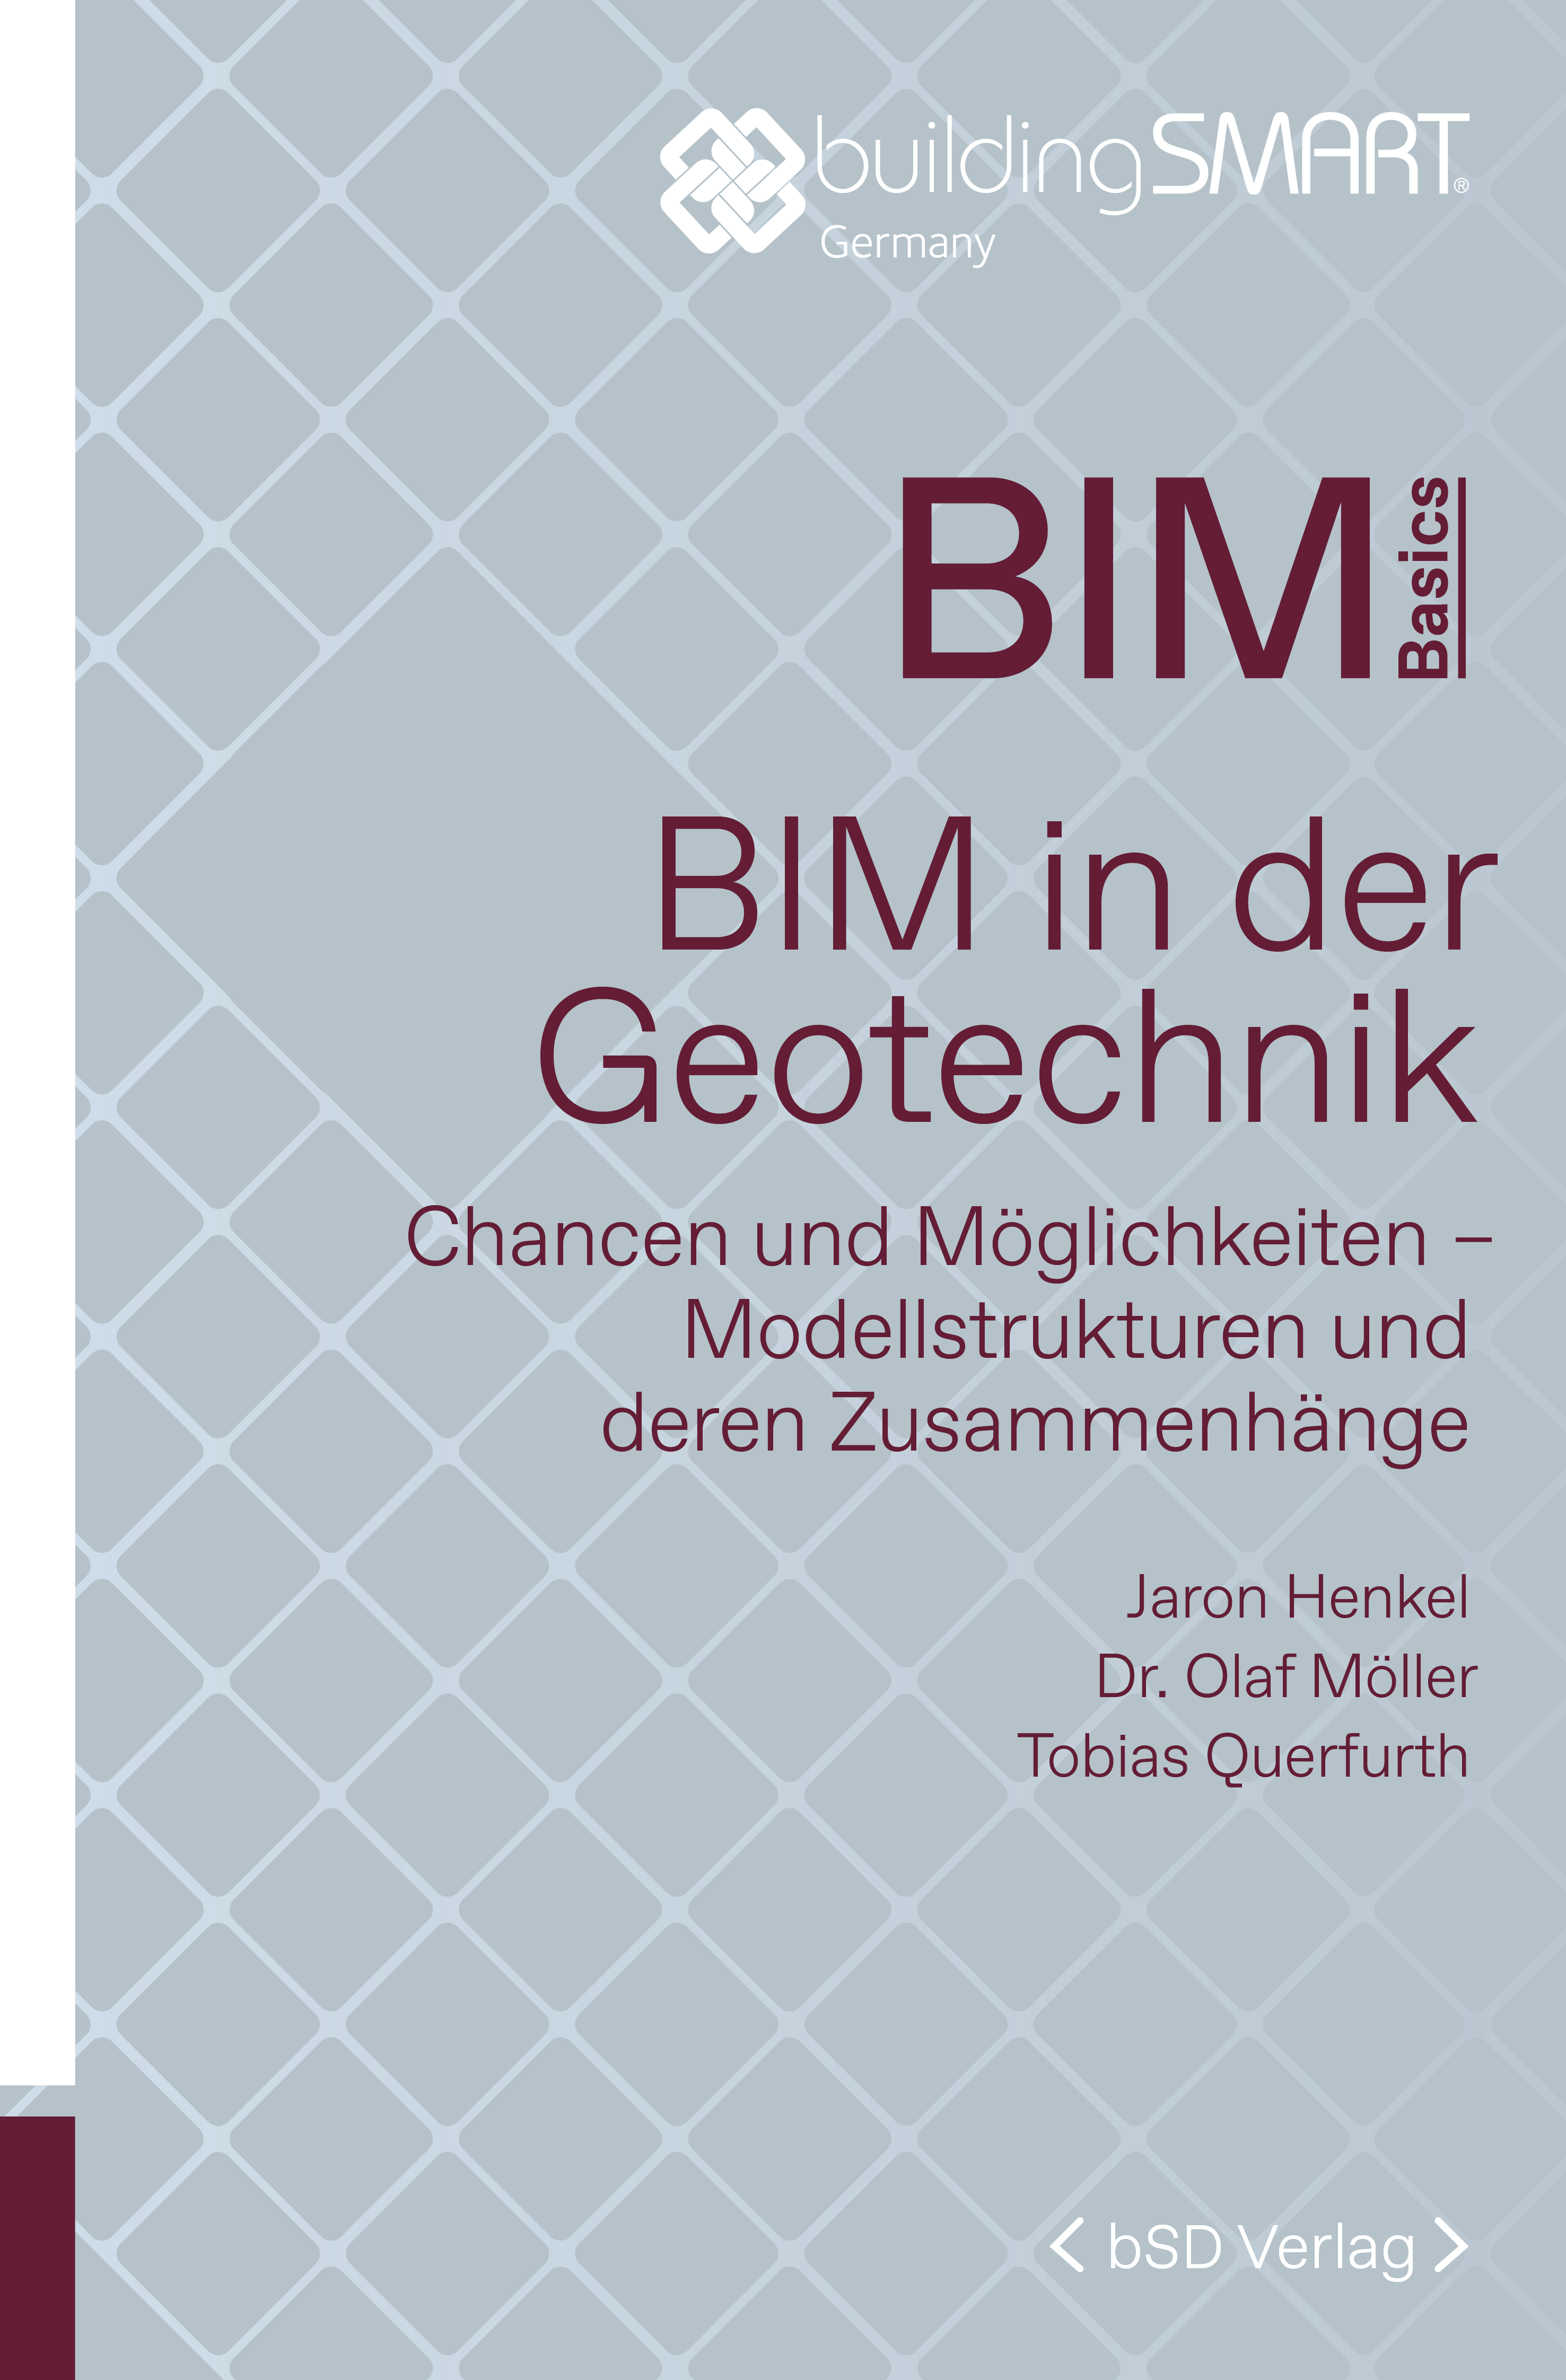 bSD Verlag/BIM Basics: BIM in der Geotechnik